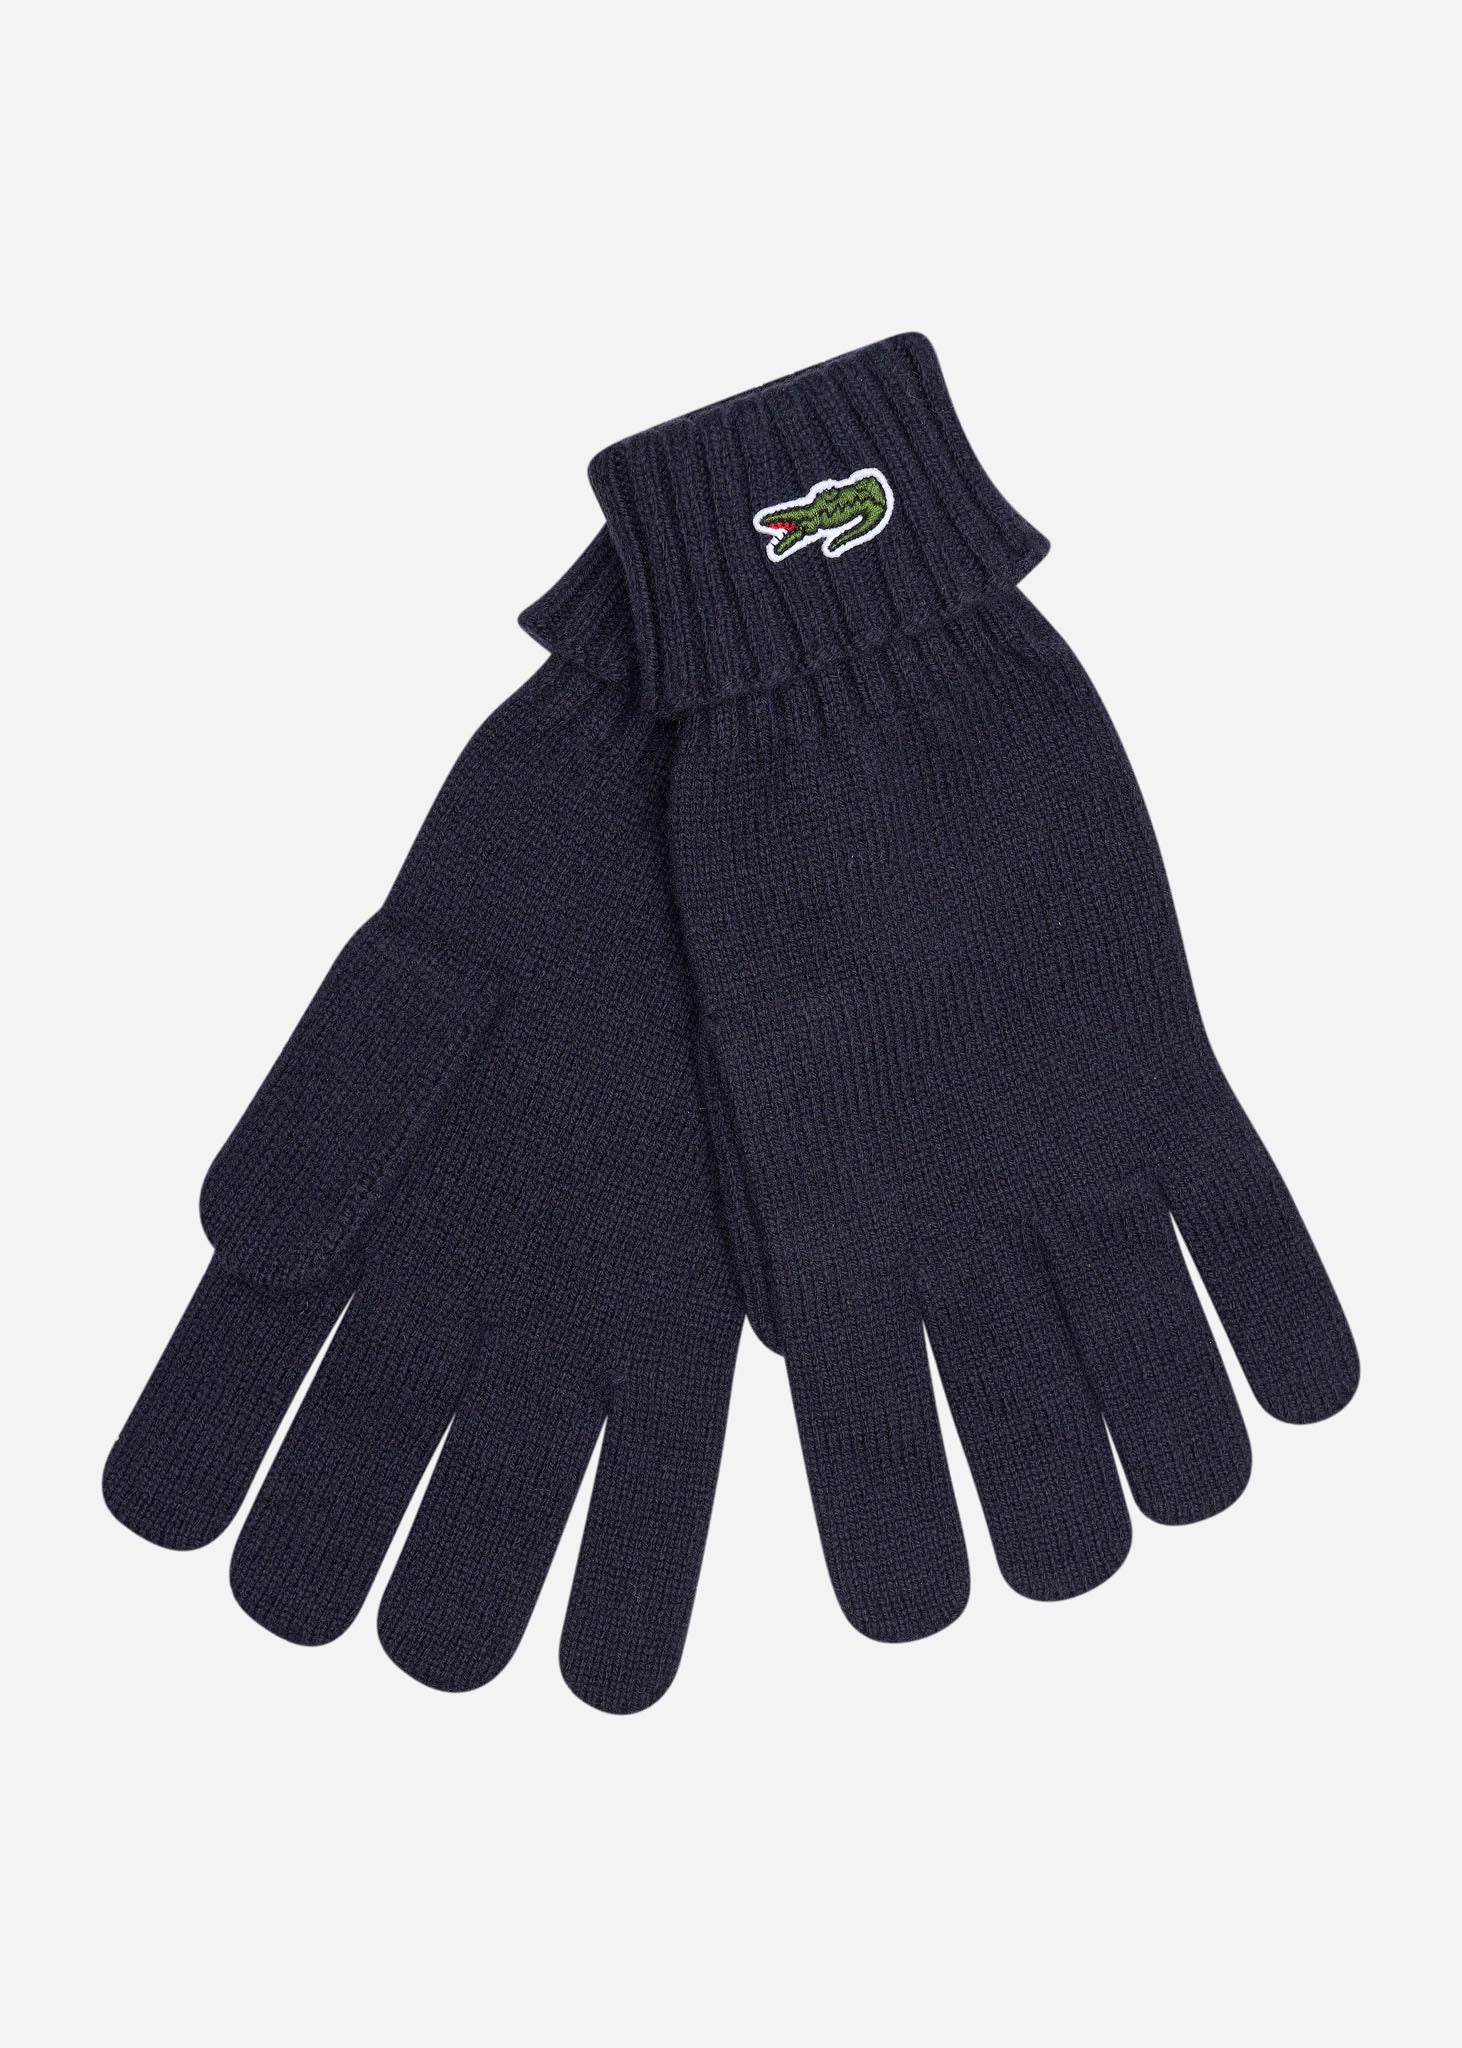 Lacoste handschoenen gloves navy blue